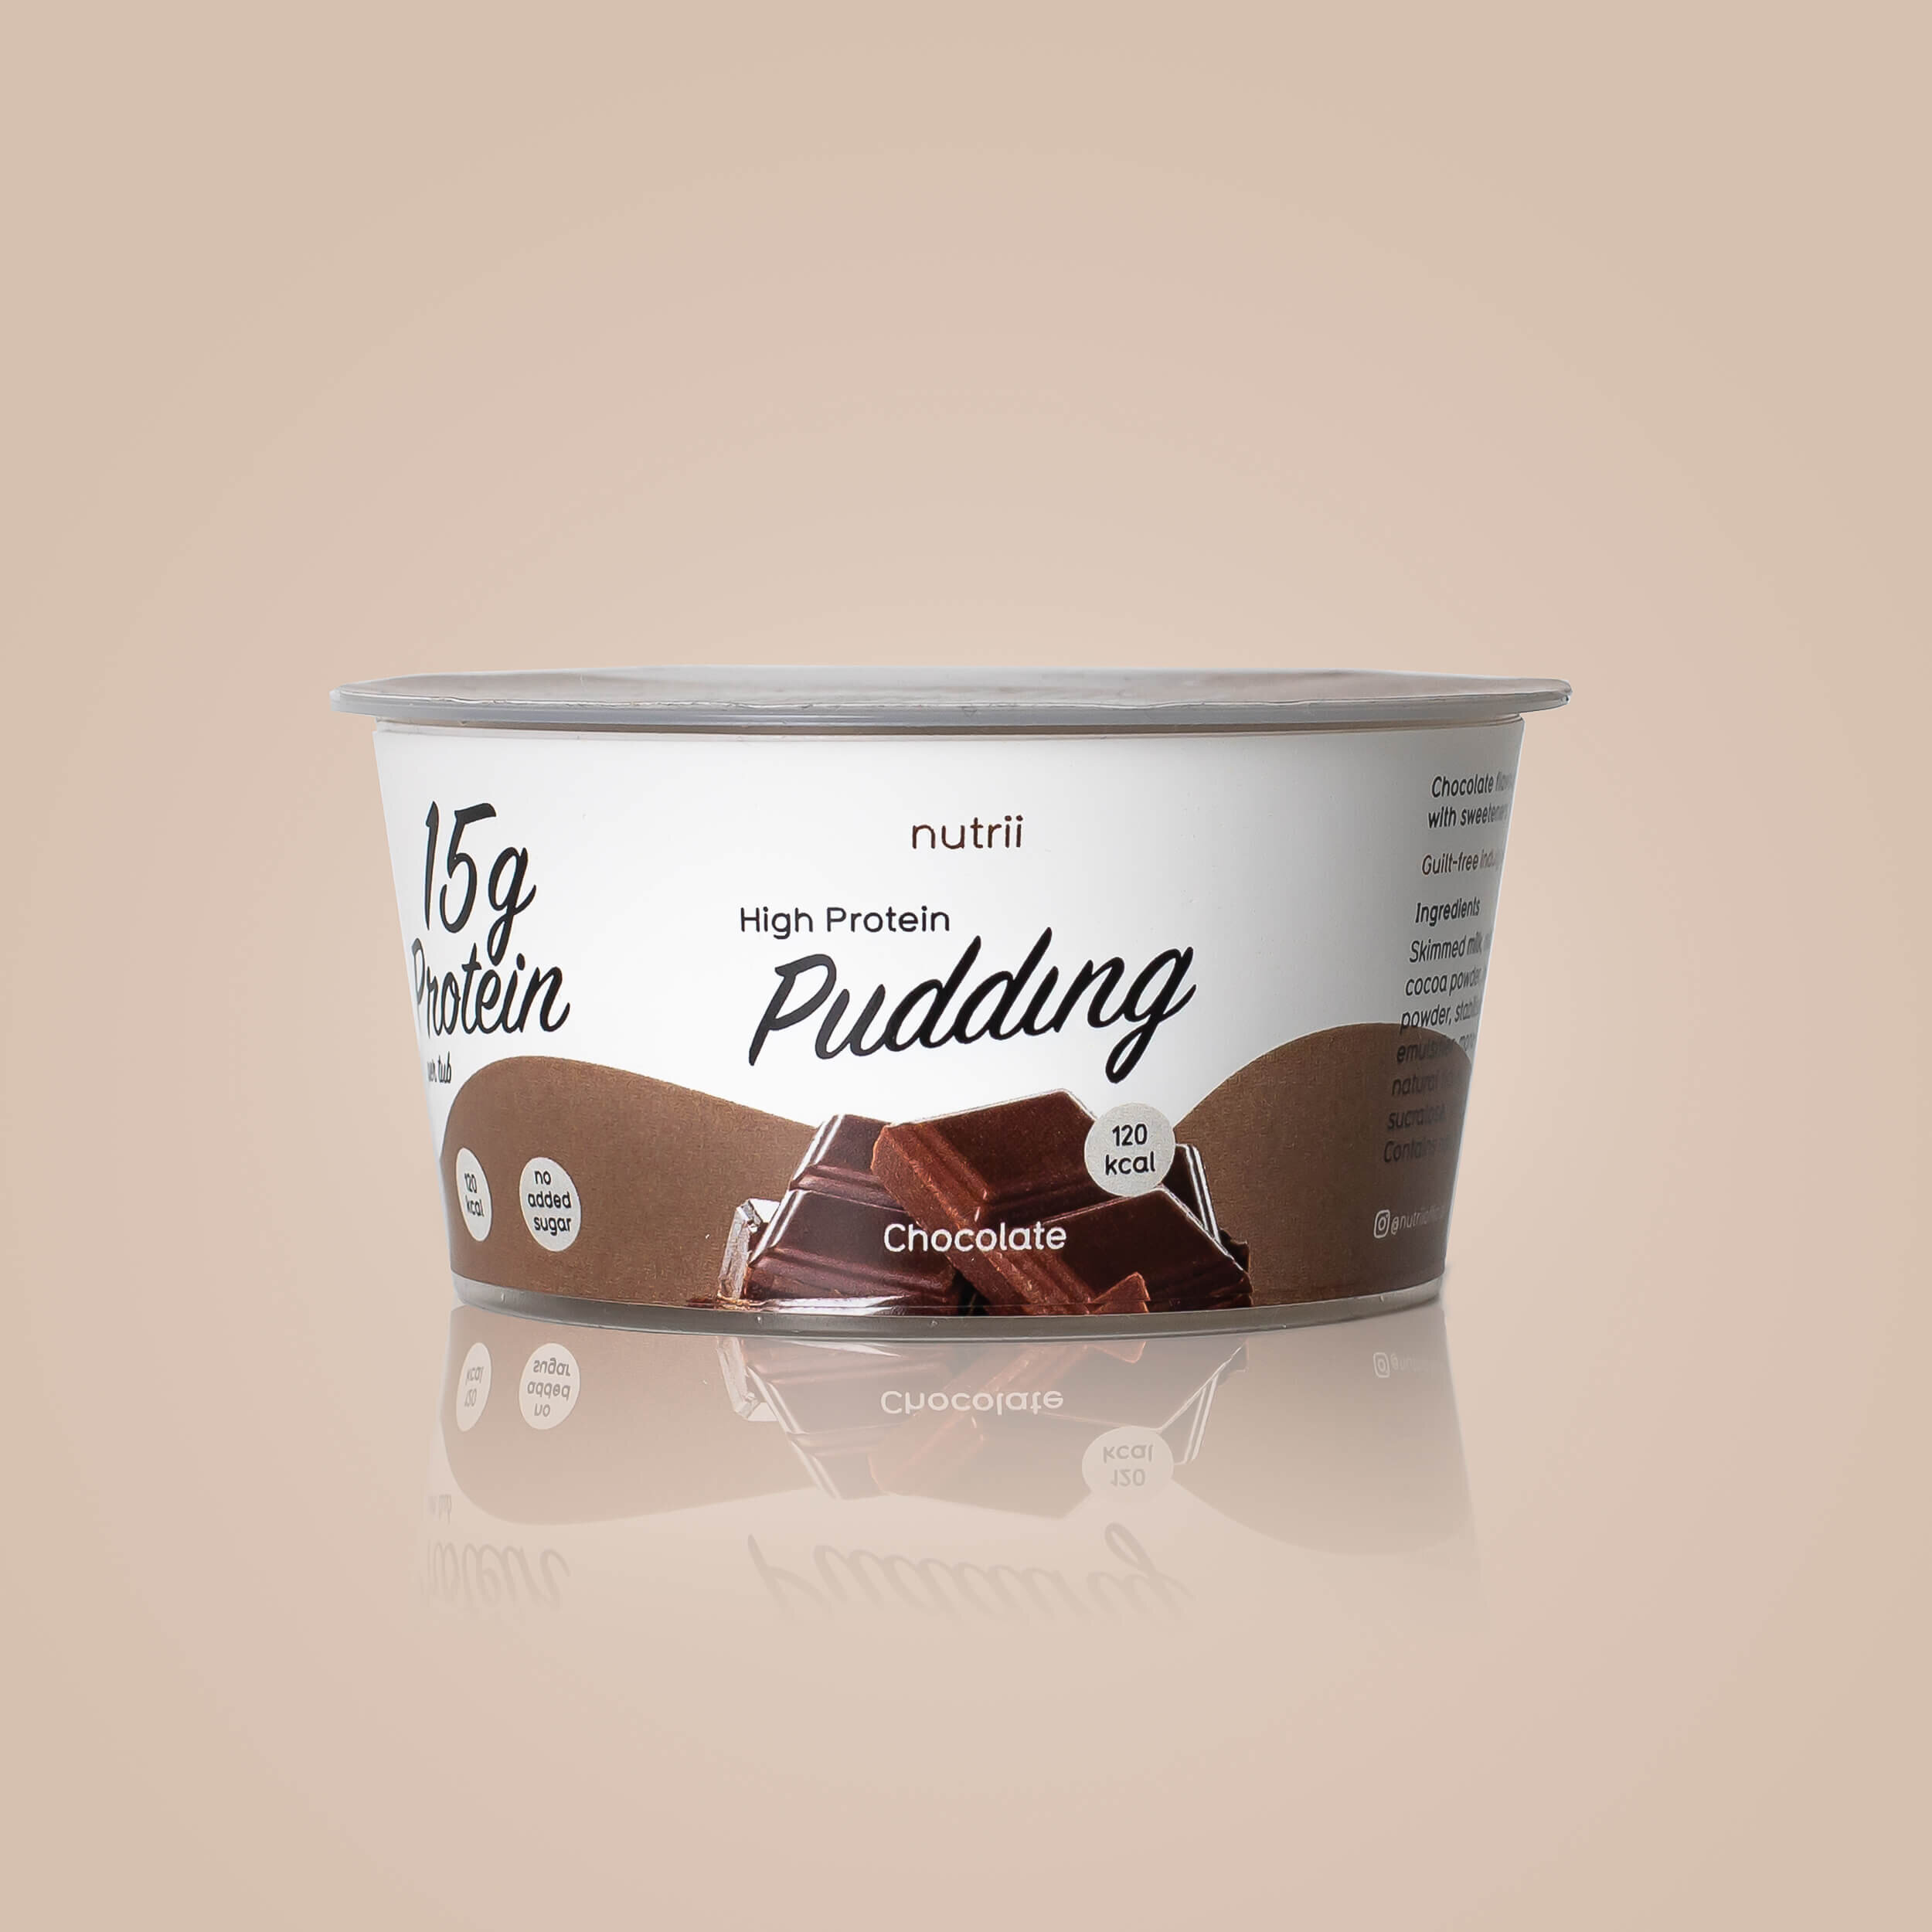 Nutrii pudding chocolate2-2.jpg